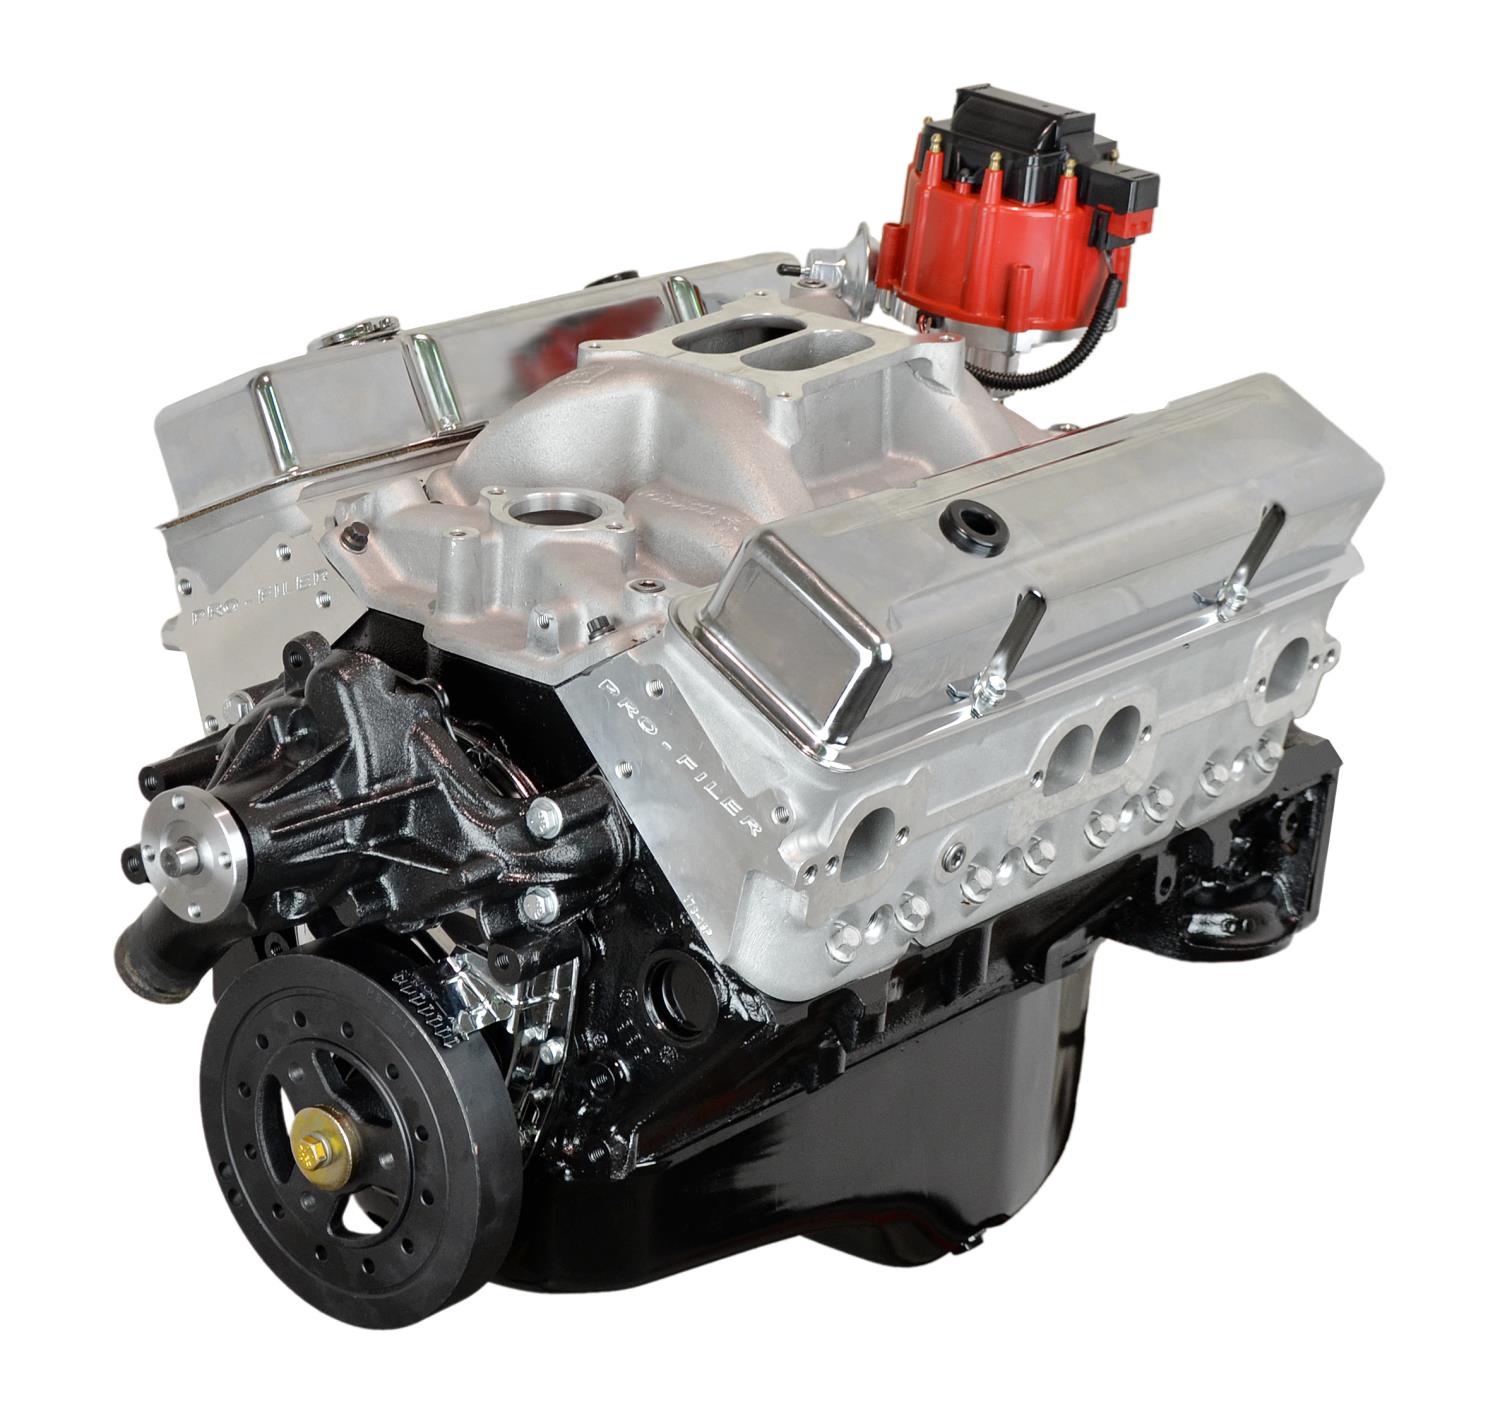 HP94M High Performance Crate Engine Small Block Chevy 383ci / 420HP / 465TQ